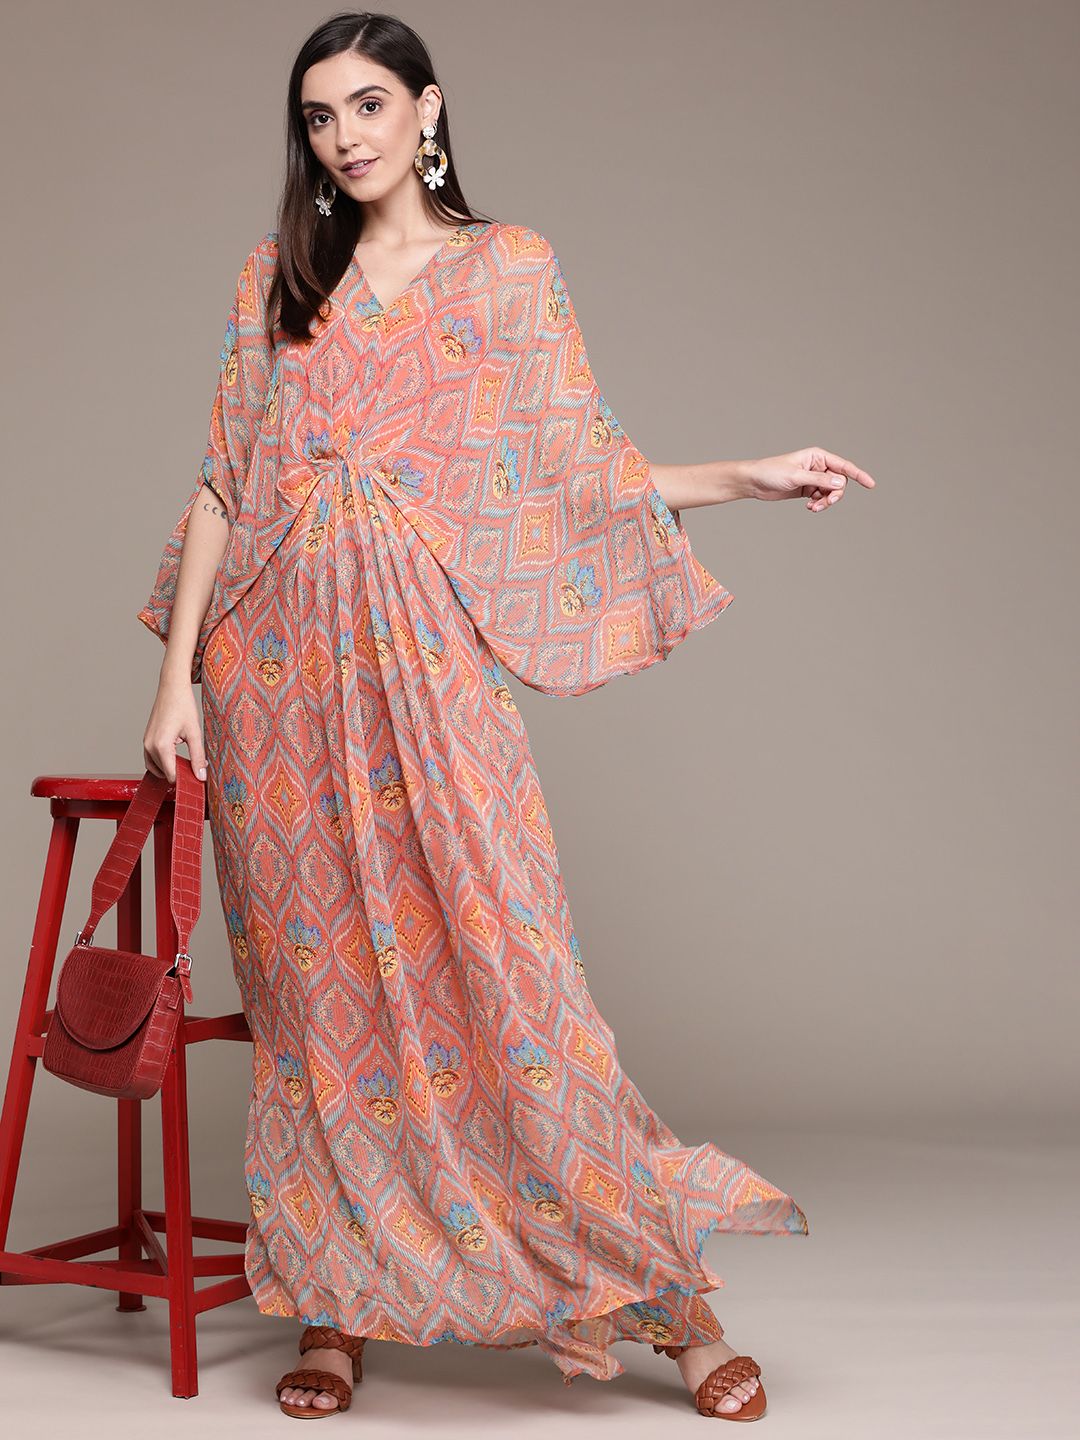 aarke Ritu Kumar Women Rust Orange & Blue Abstract Printed Kaftan Maxi Dress Price in India